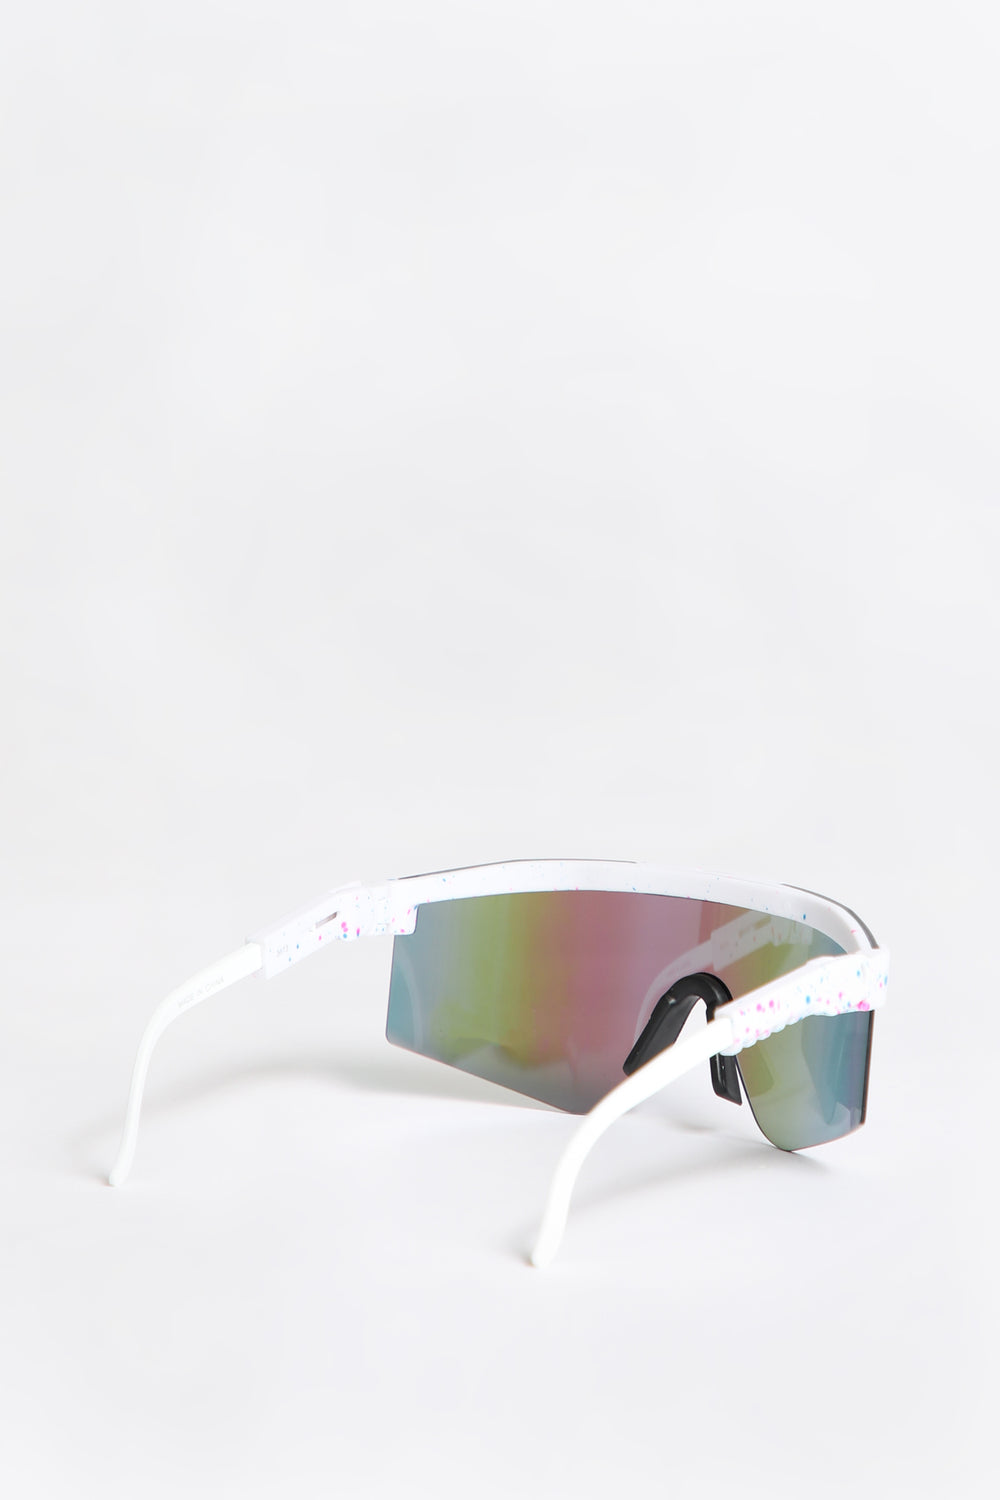 West49 Printed Shield Sunglasses West49 Printed Shield Sunglasses